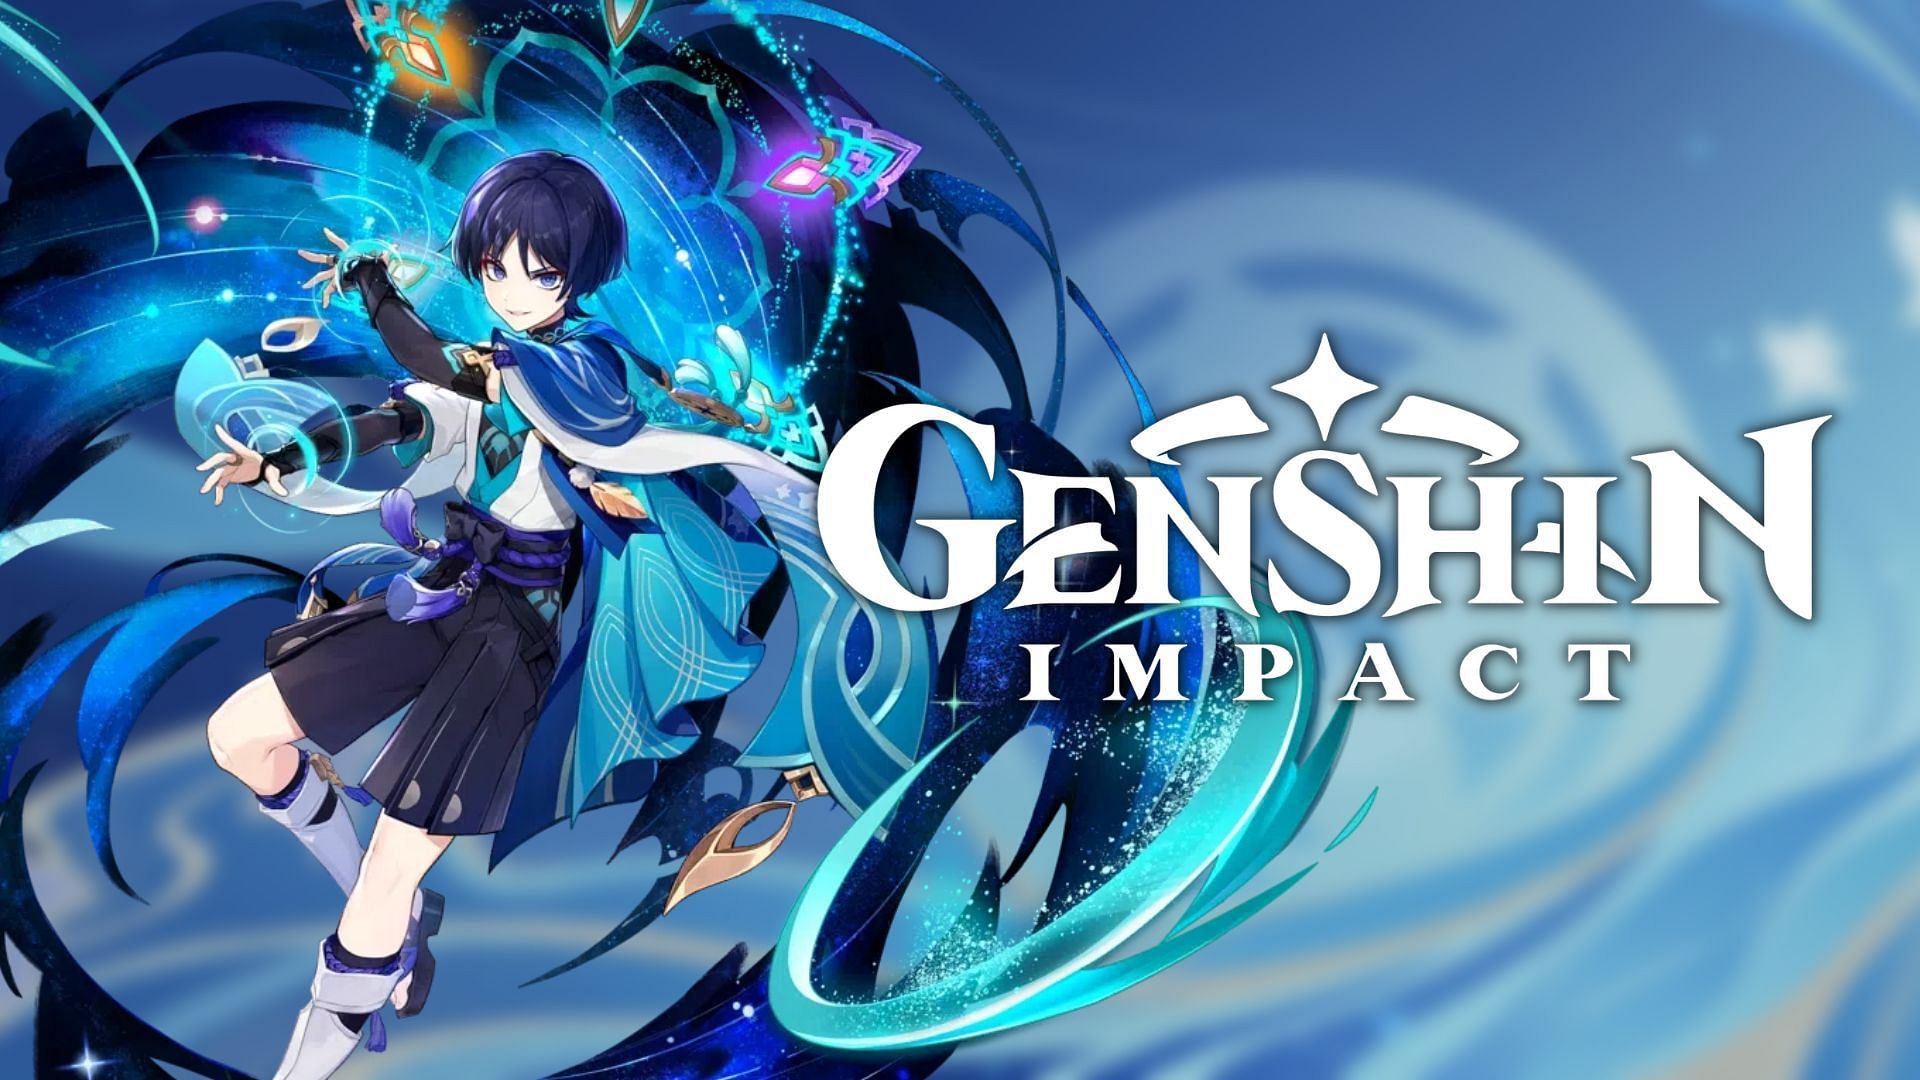 Genshin impact mobile download size fukse